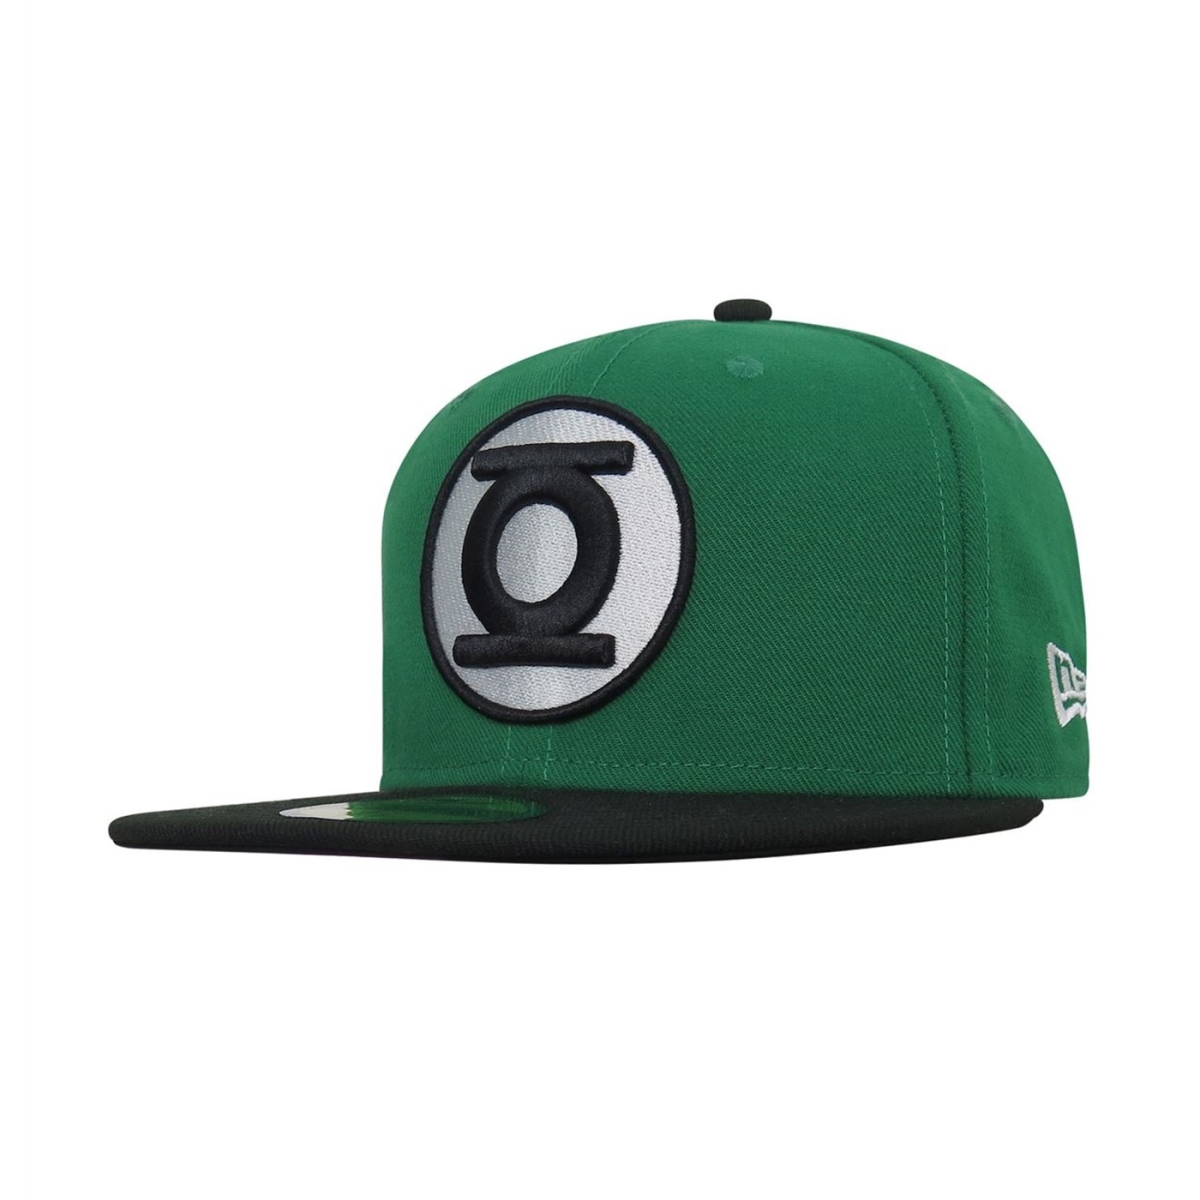 Picture of Green Lantern hatglhaljordan5950-778-7 7-8 Fitted Green Lantern Hal Jordan 59Fifty Fitted Hat - Size 7.875